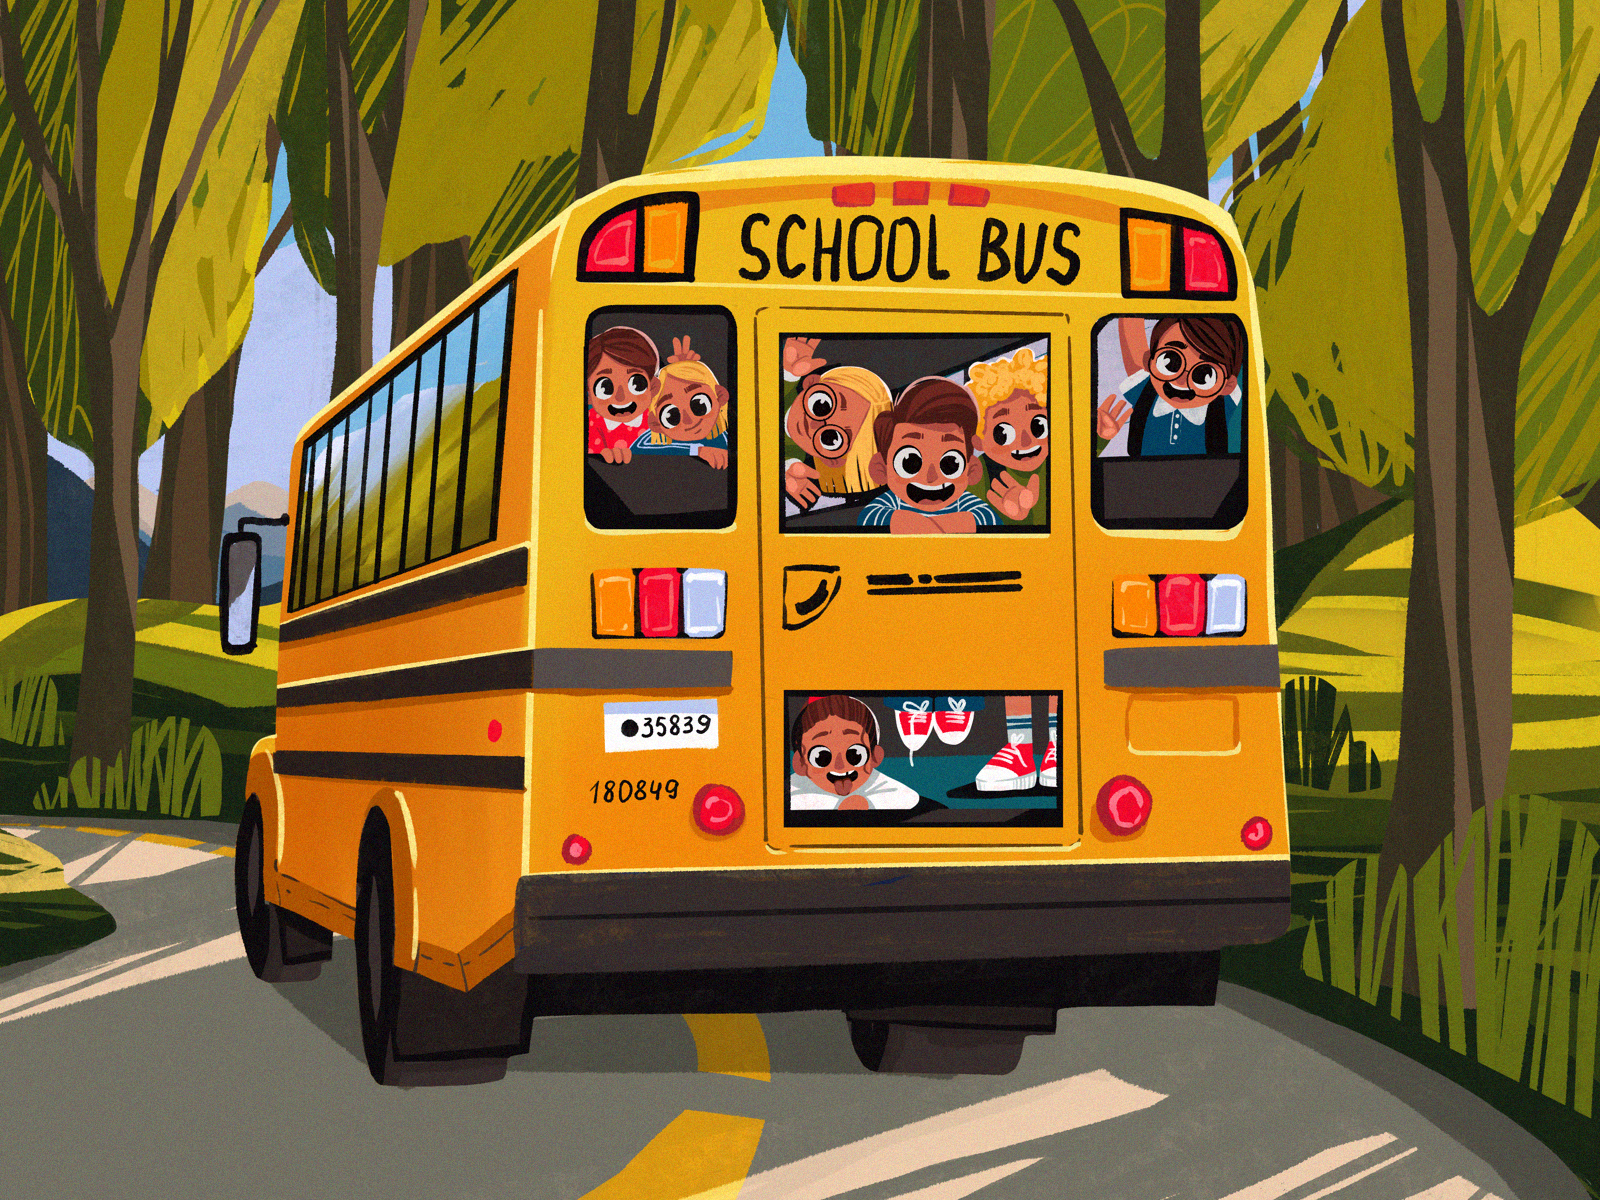 Funny School Bus Illustration by tubik.arts on Dribbble